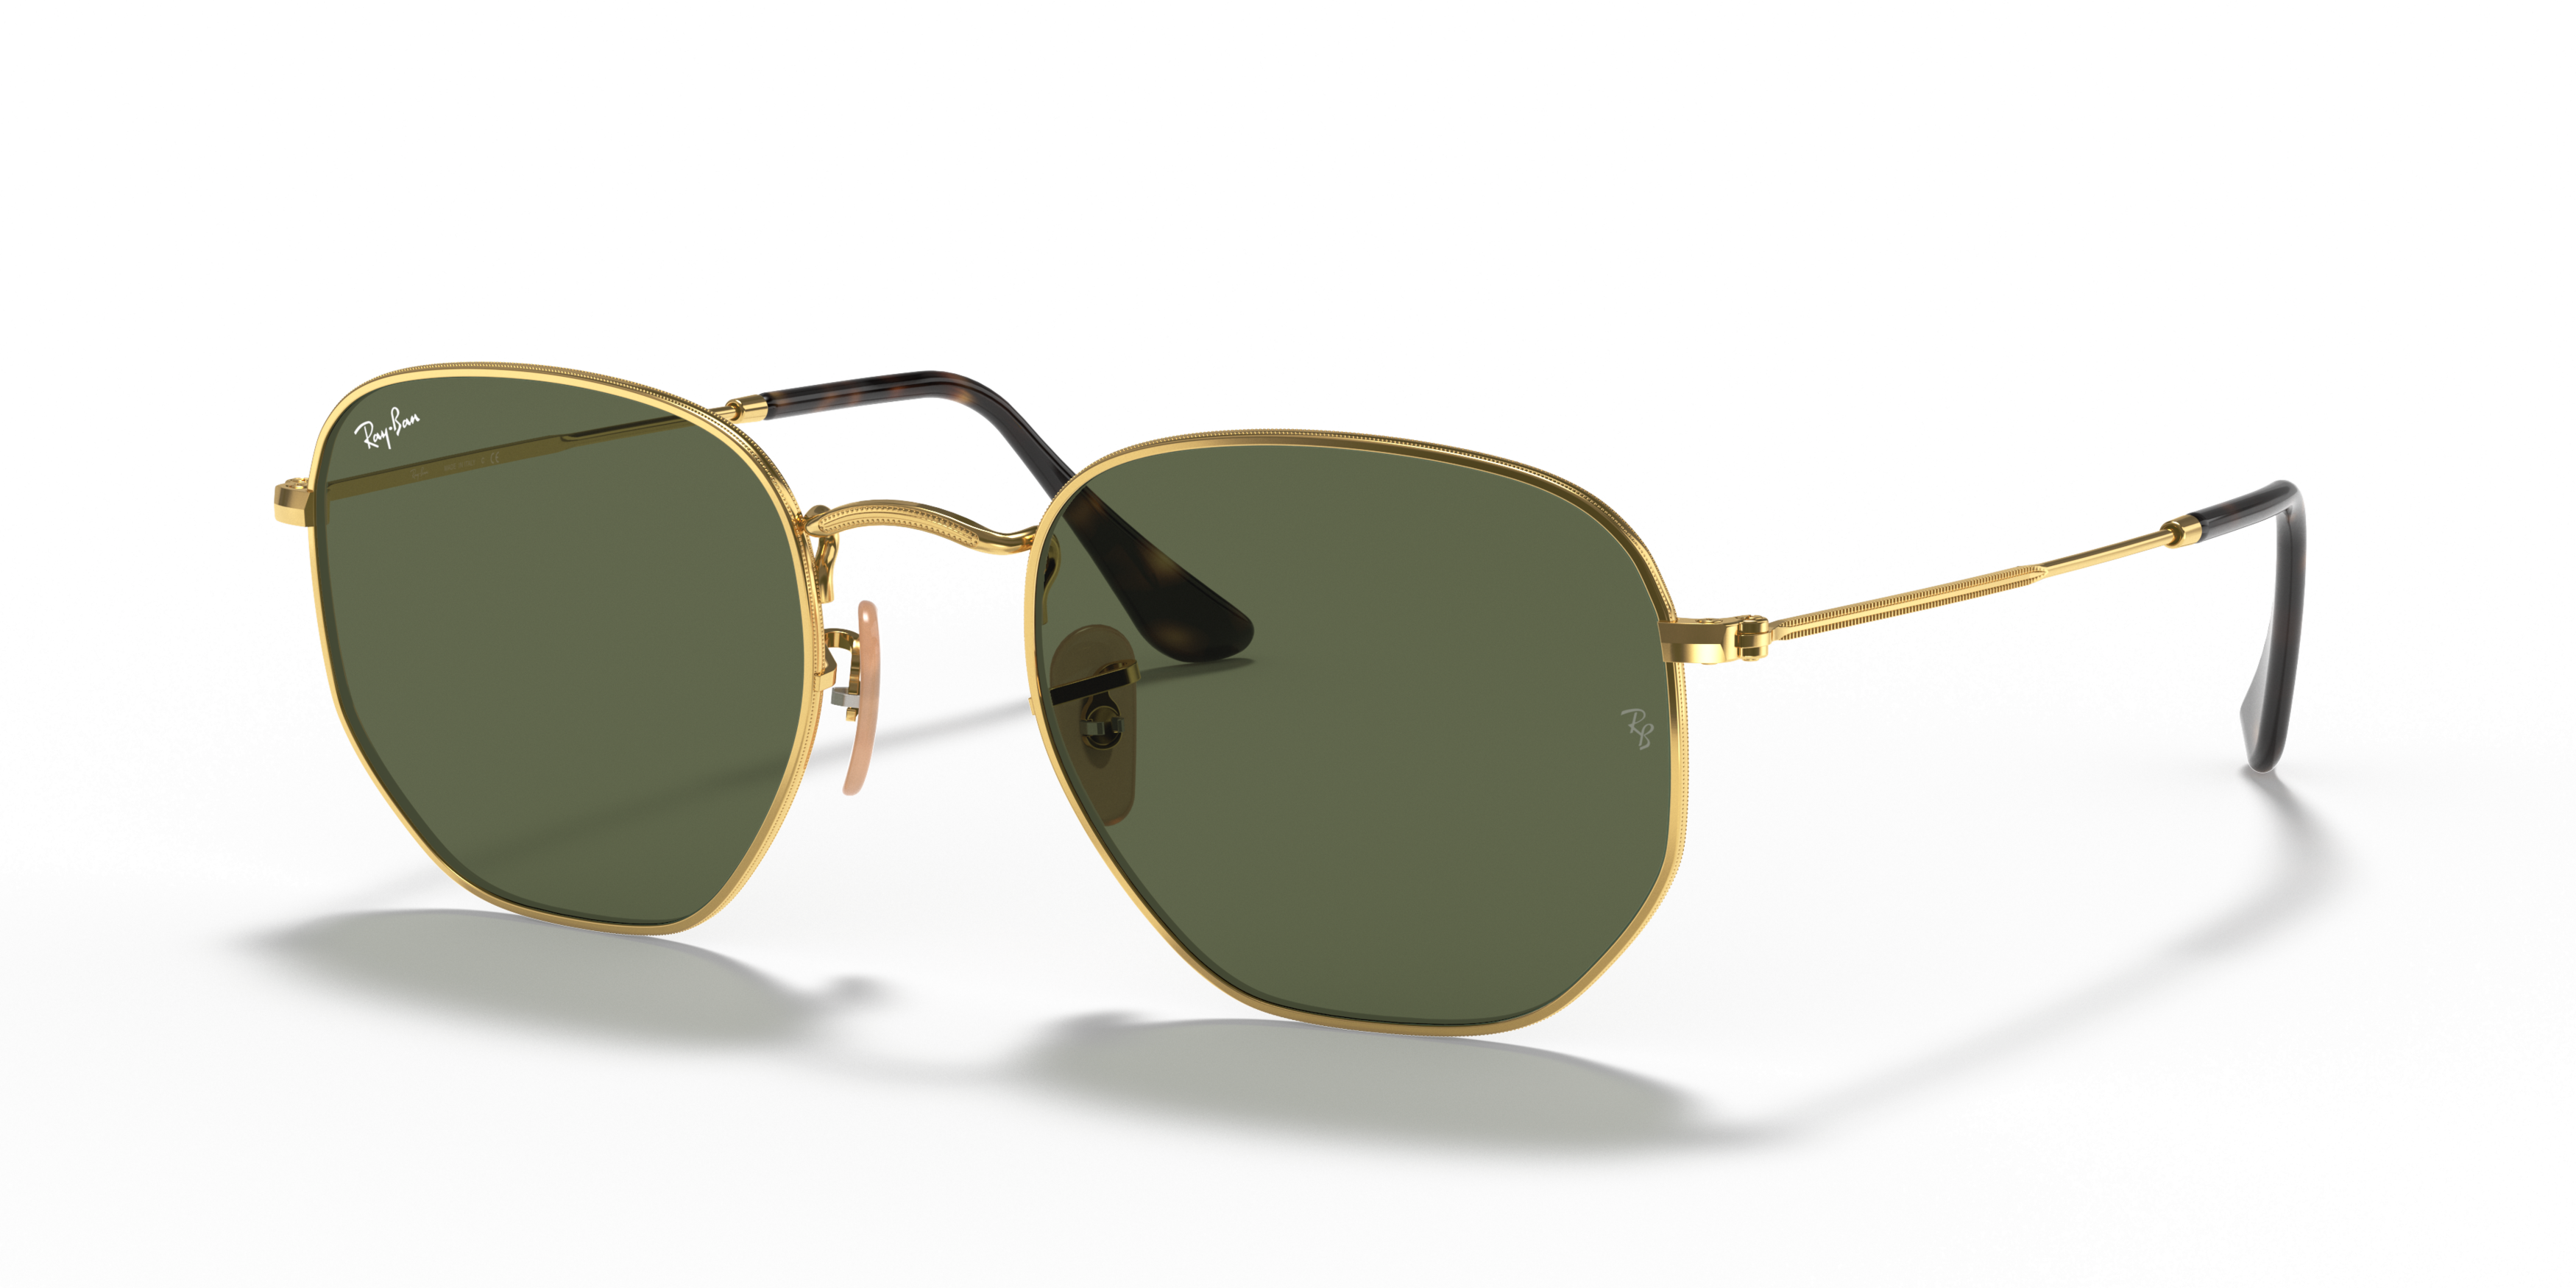 Angle_Left01 Ray-Ban RB 3548N (001) Sunglasses Green / Gold